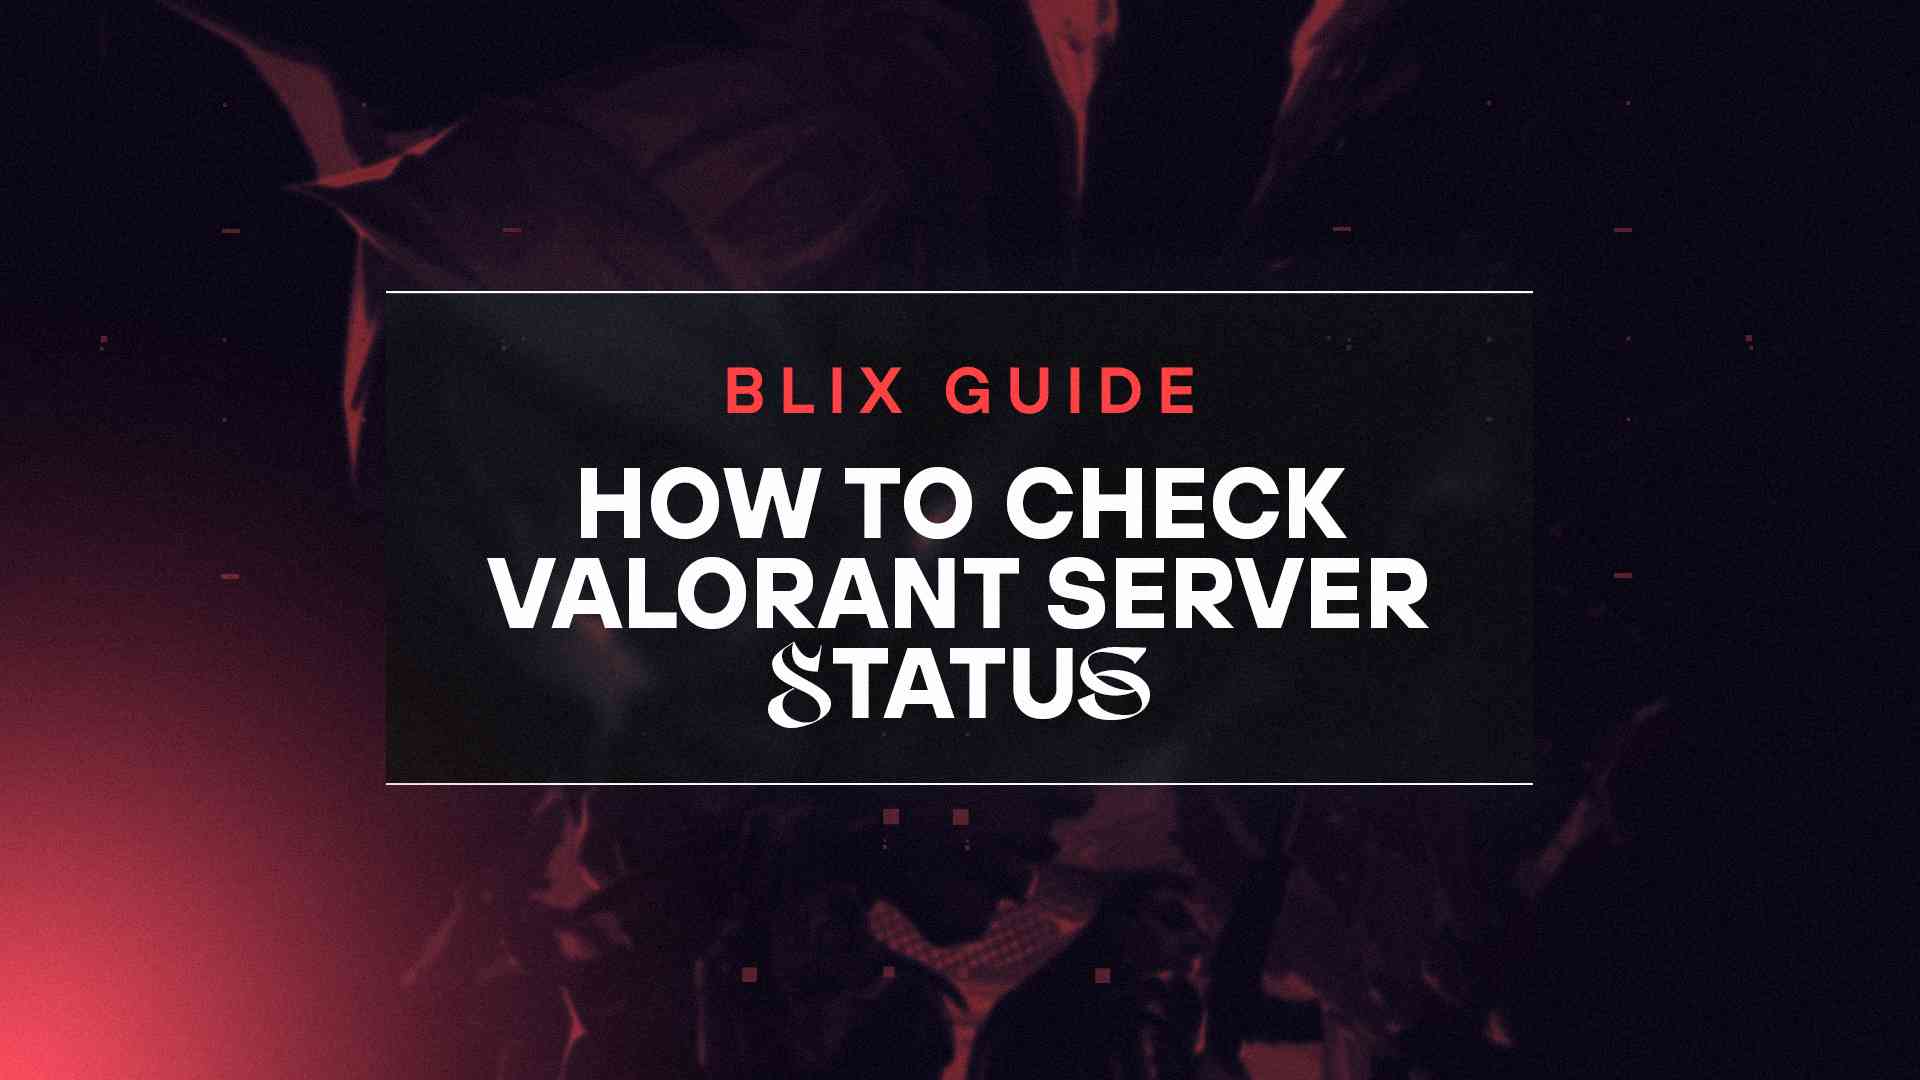 Riot Games' server status: how to check LoL, Valorant servers